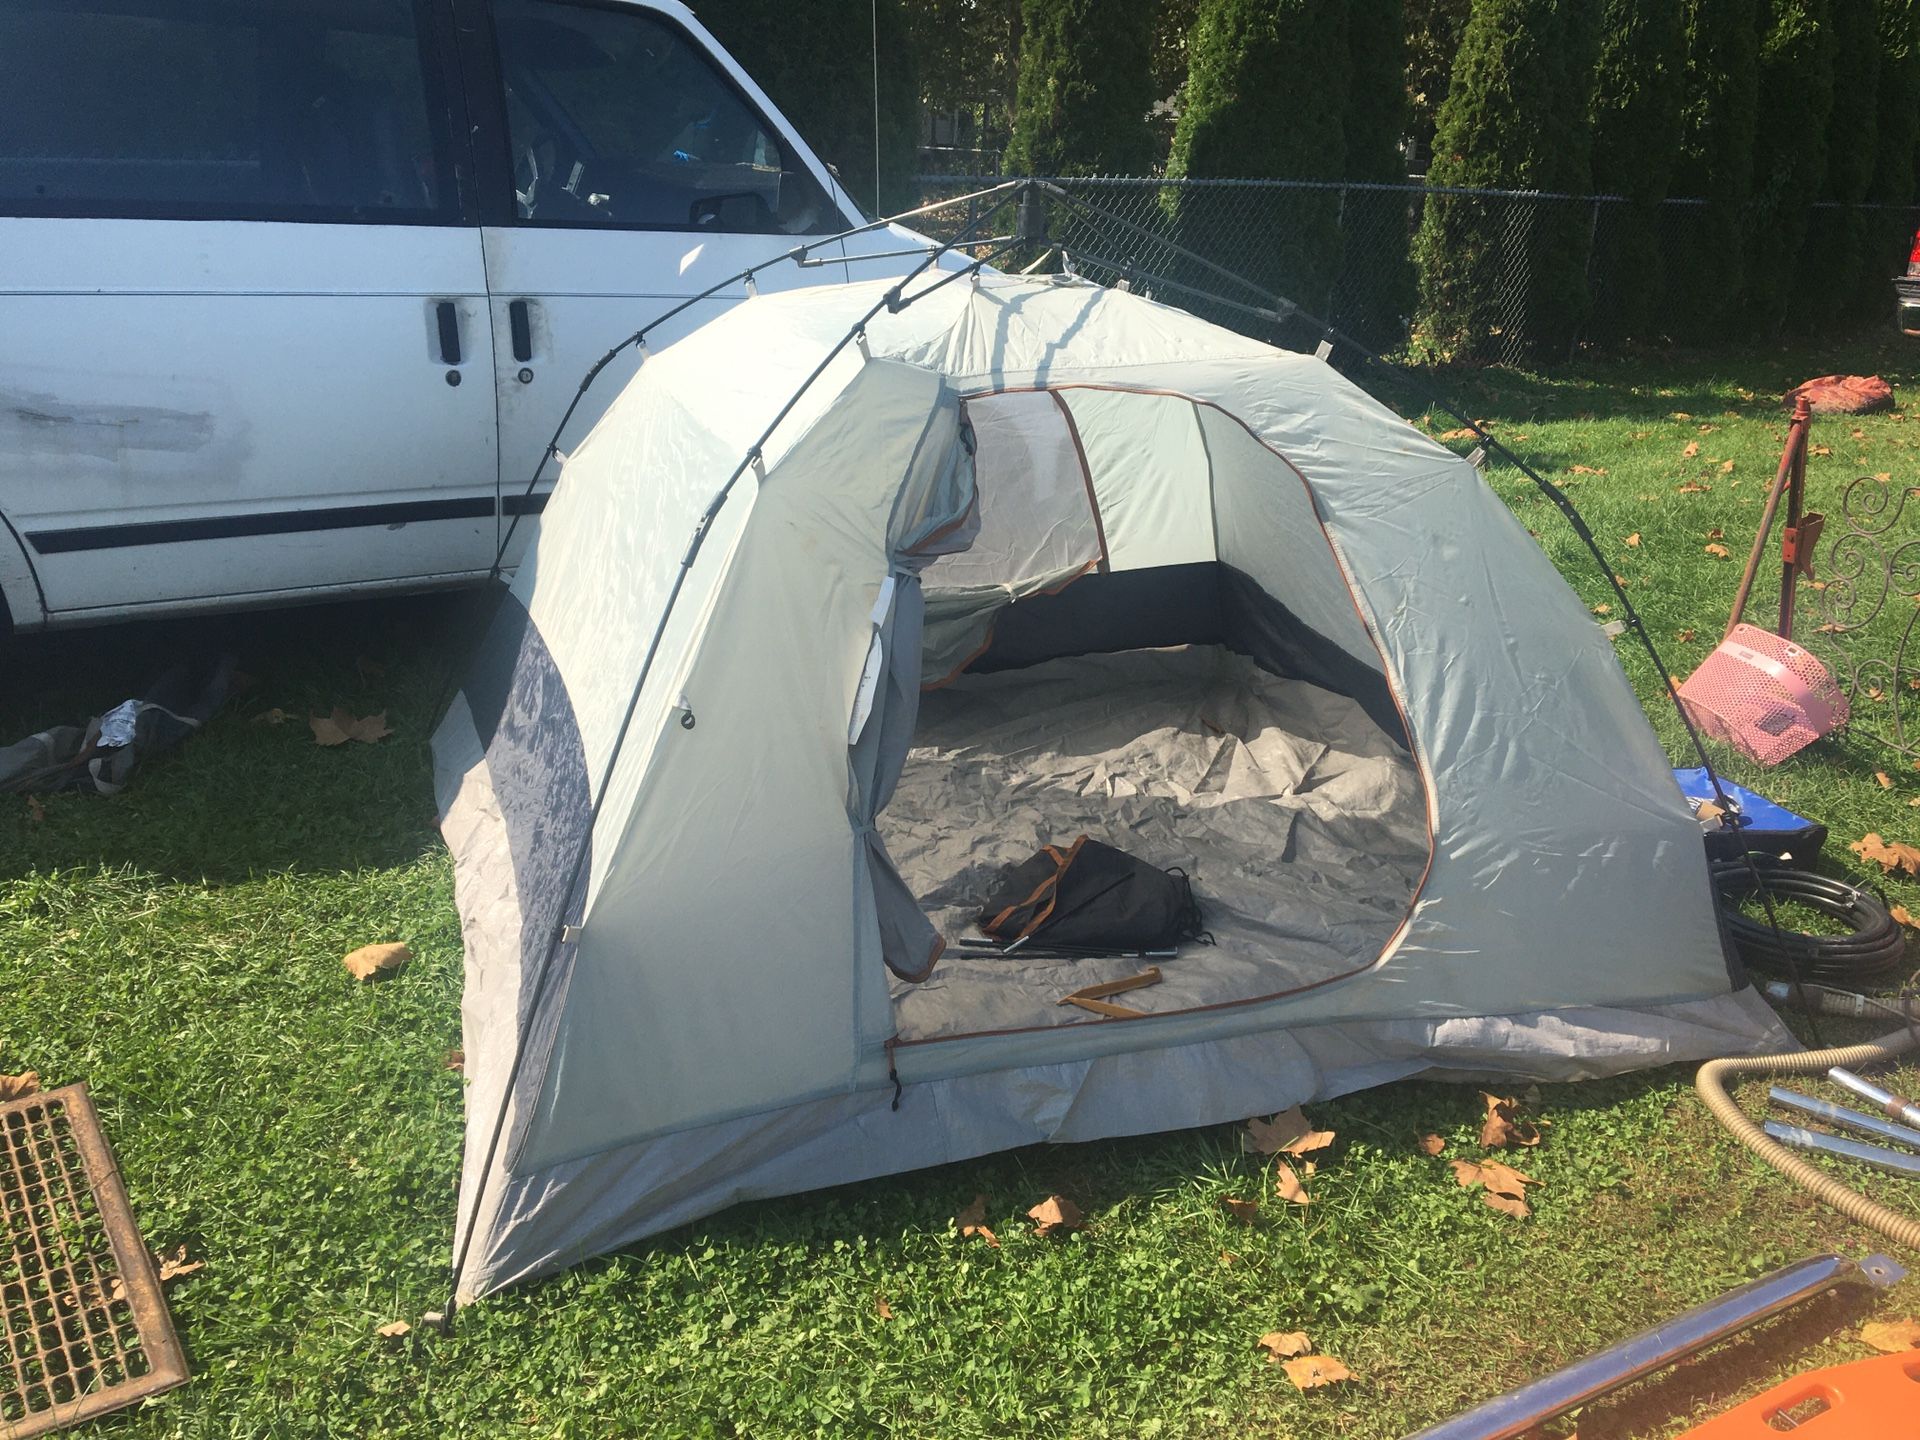 Marlboro tent and sleeping bag like new